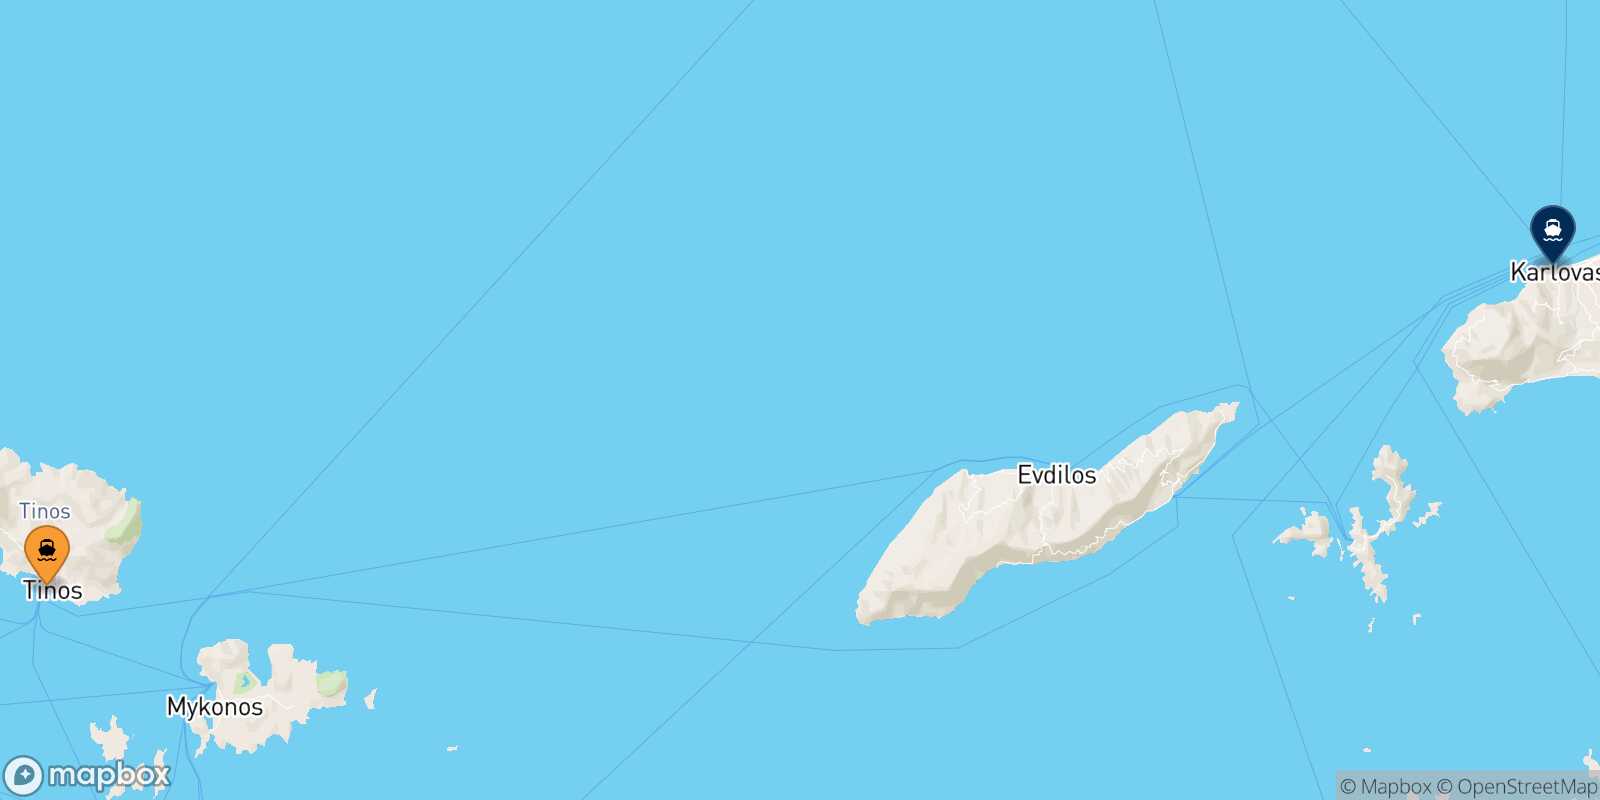 Carte des traverséesTinos Karlovassi (Samos)